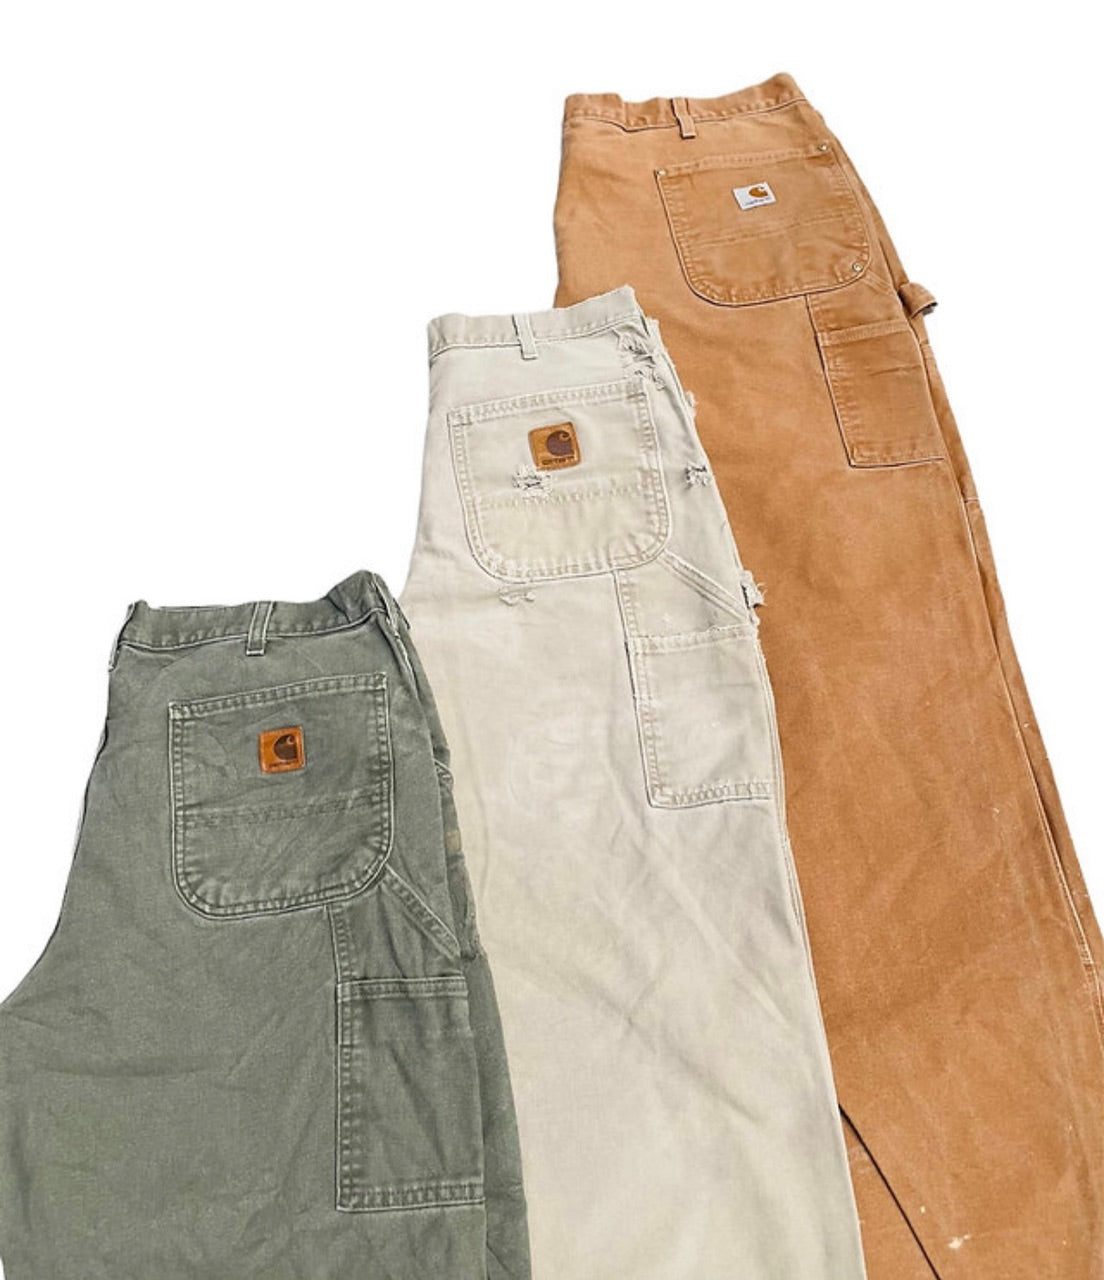 Carhartt Trousers Grade B/C - Large Sizes X20